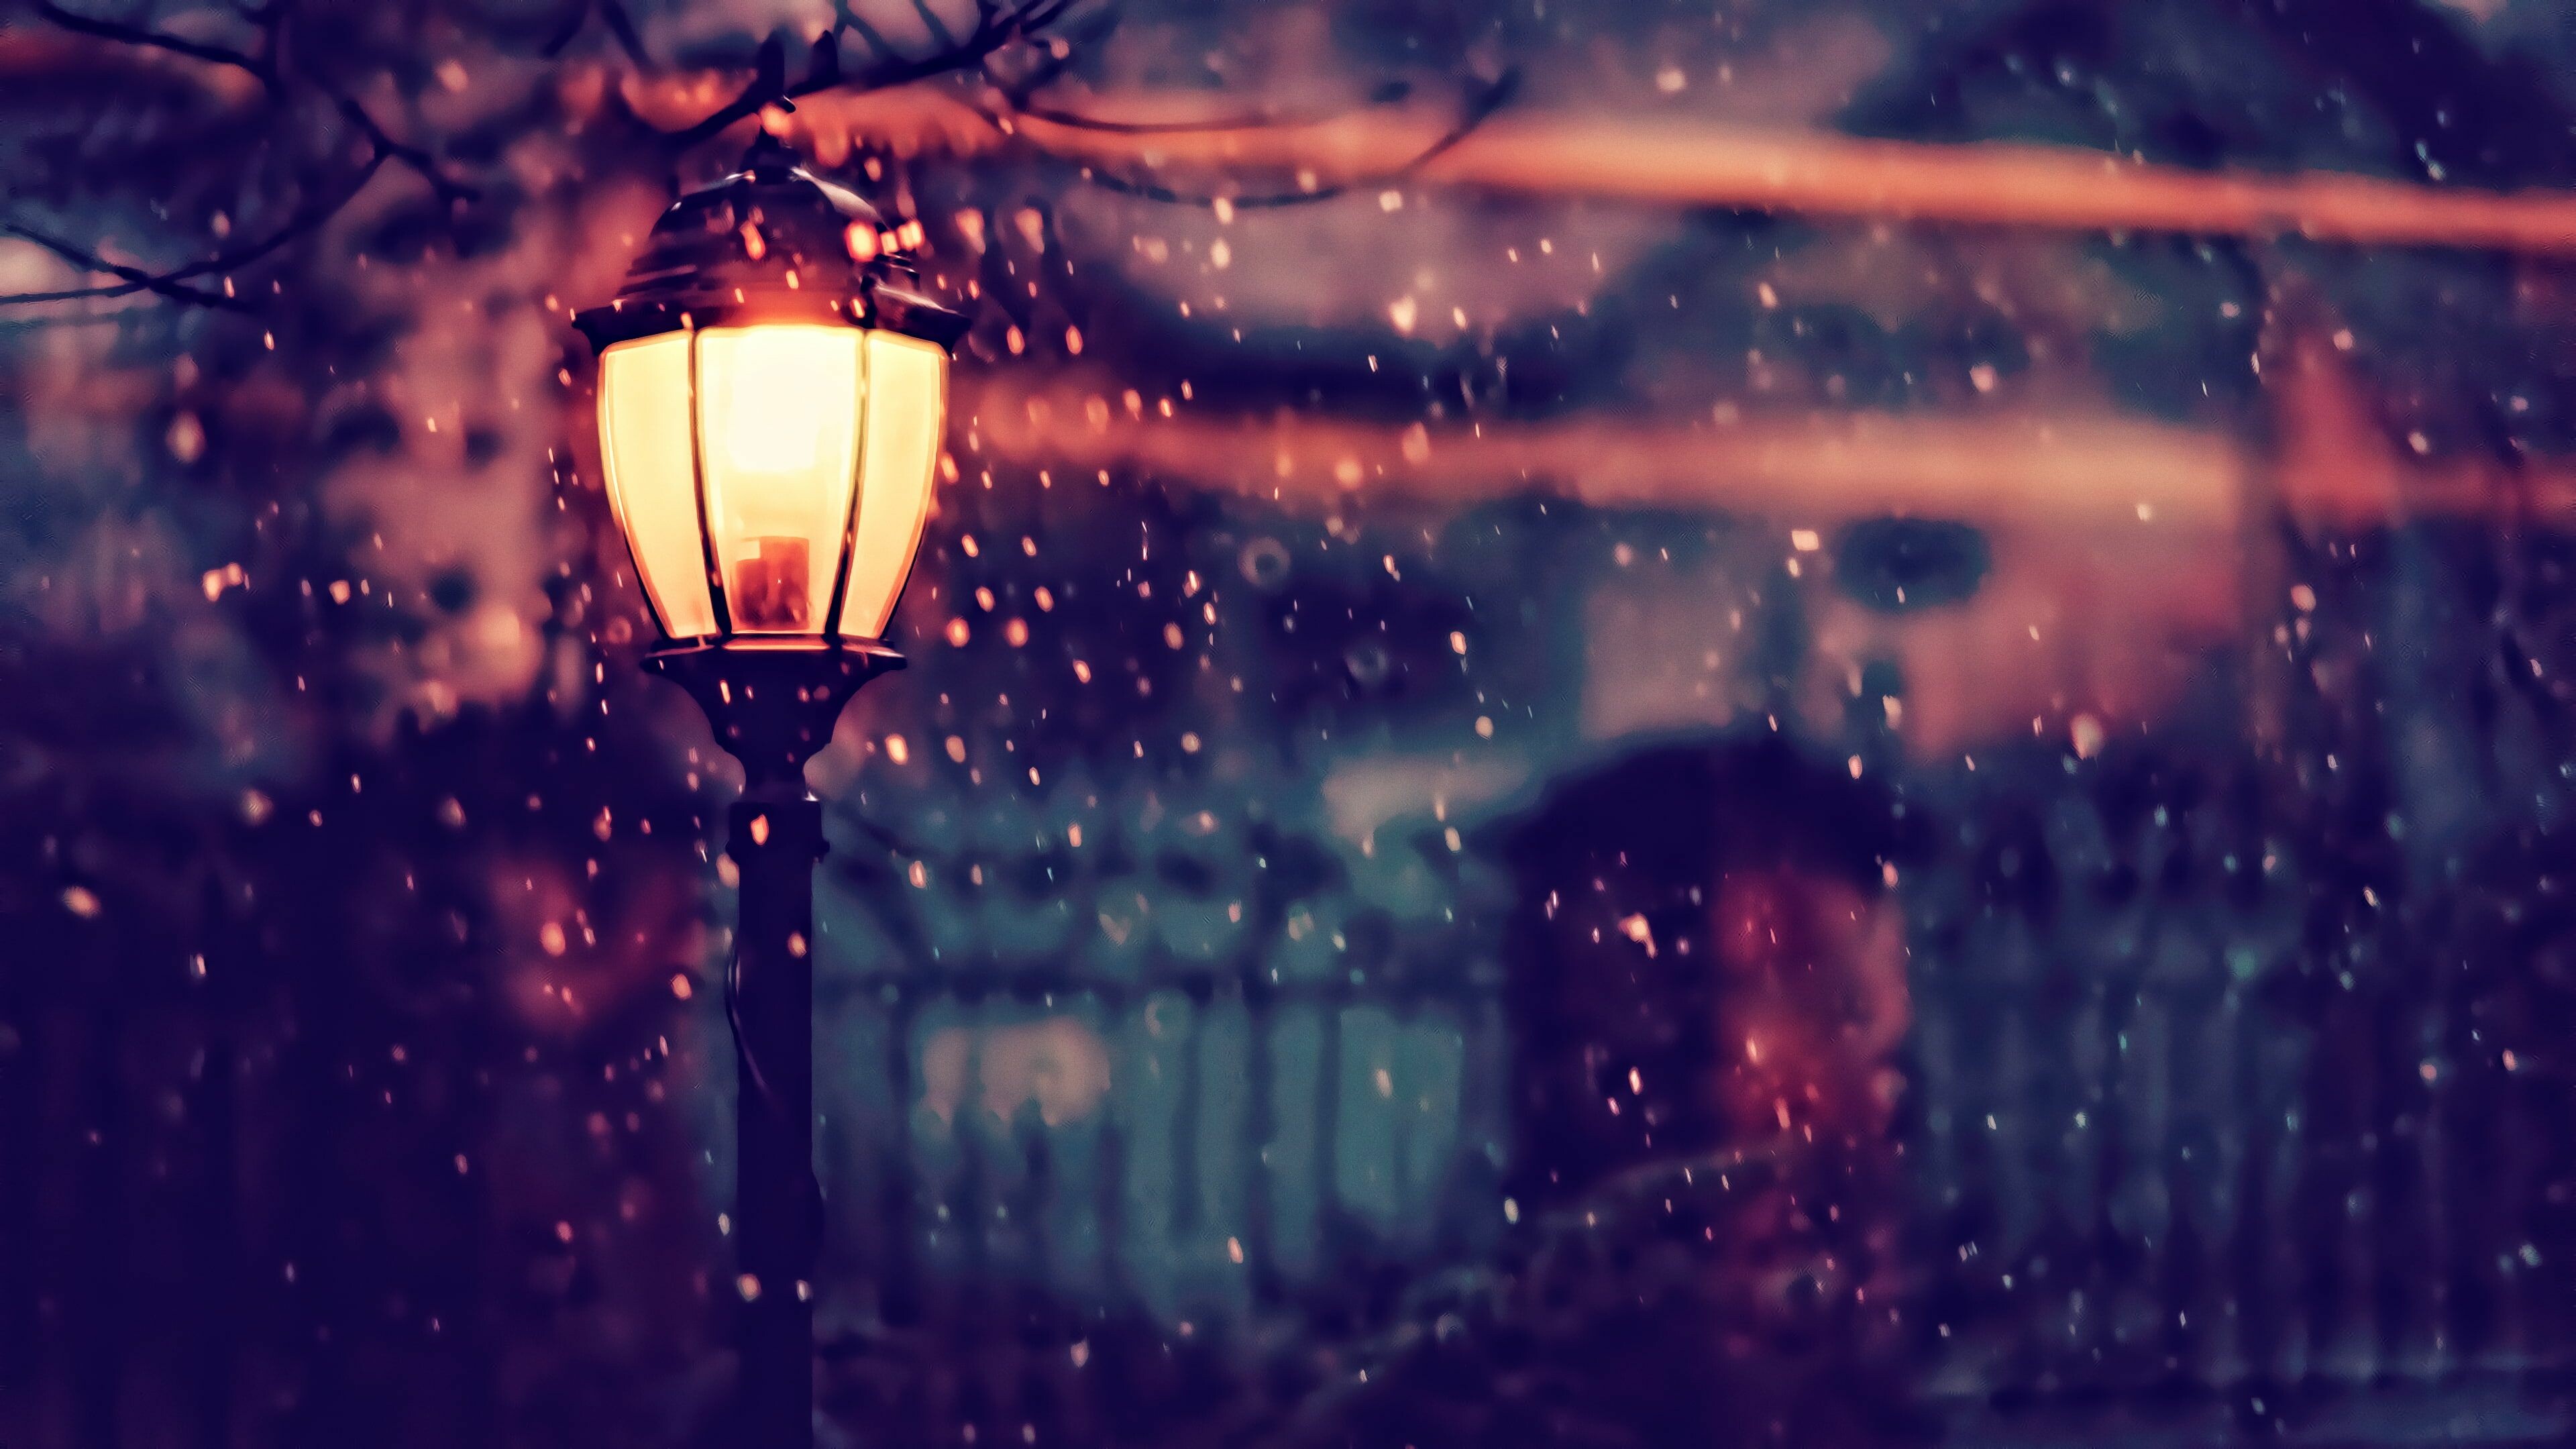 Lanterns: Street light, Lamp, Source of lighting, Shining, Illumination. 3840x2160 4K Background.